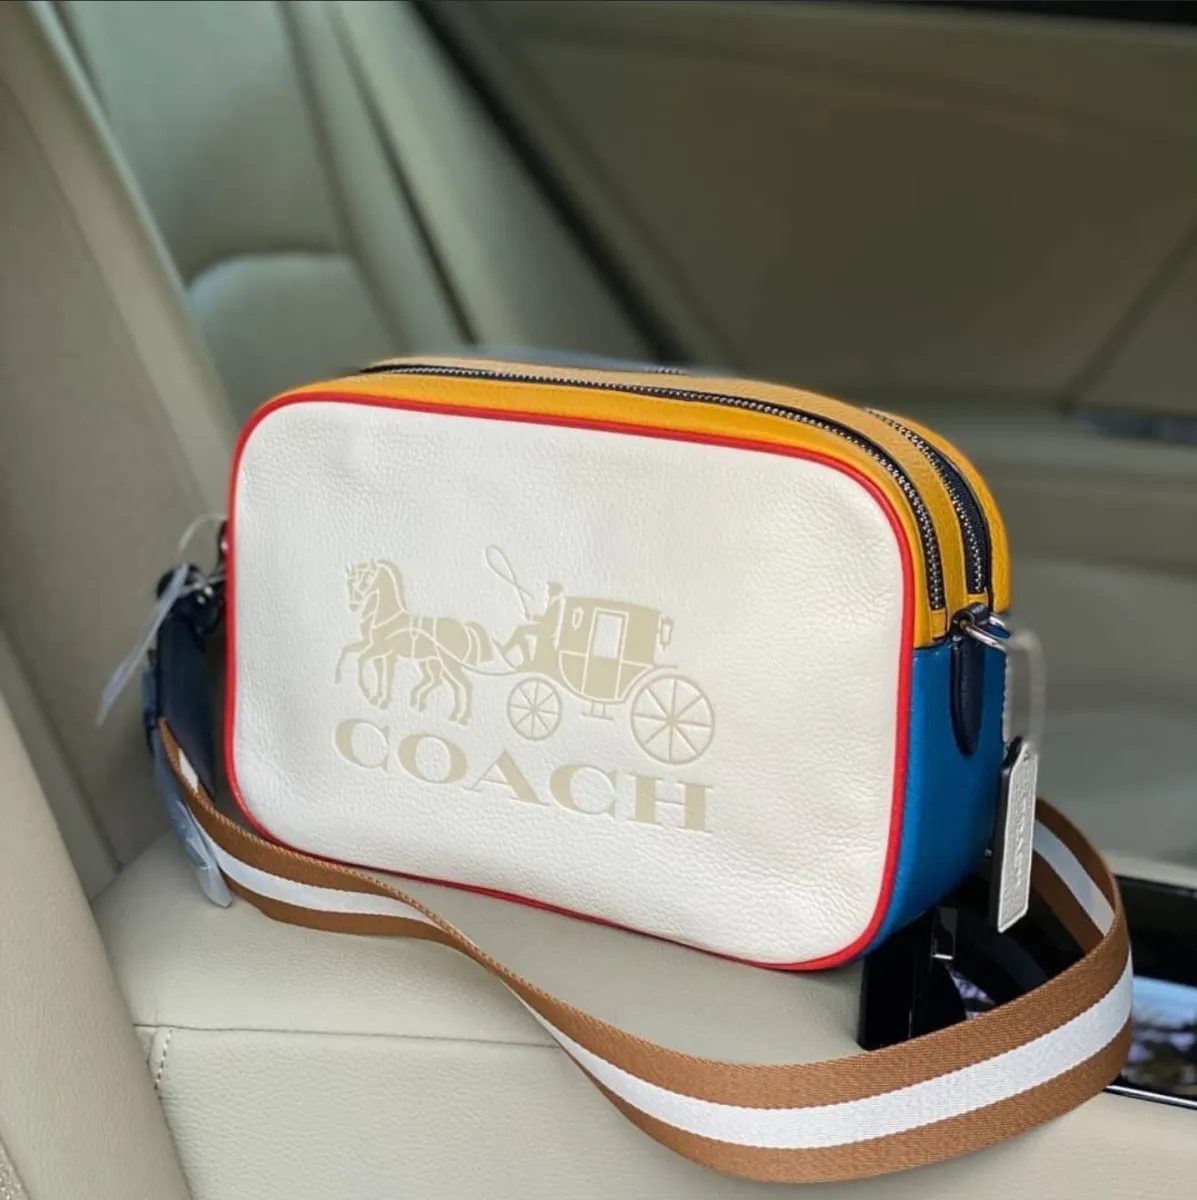 Guaranteed Original Coach Jes Crossbody In Colorblock In Refined Pebble  Leather Women's Crossbody Bag 3041 - Chalk / Multi